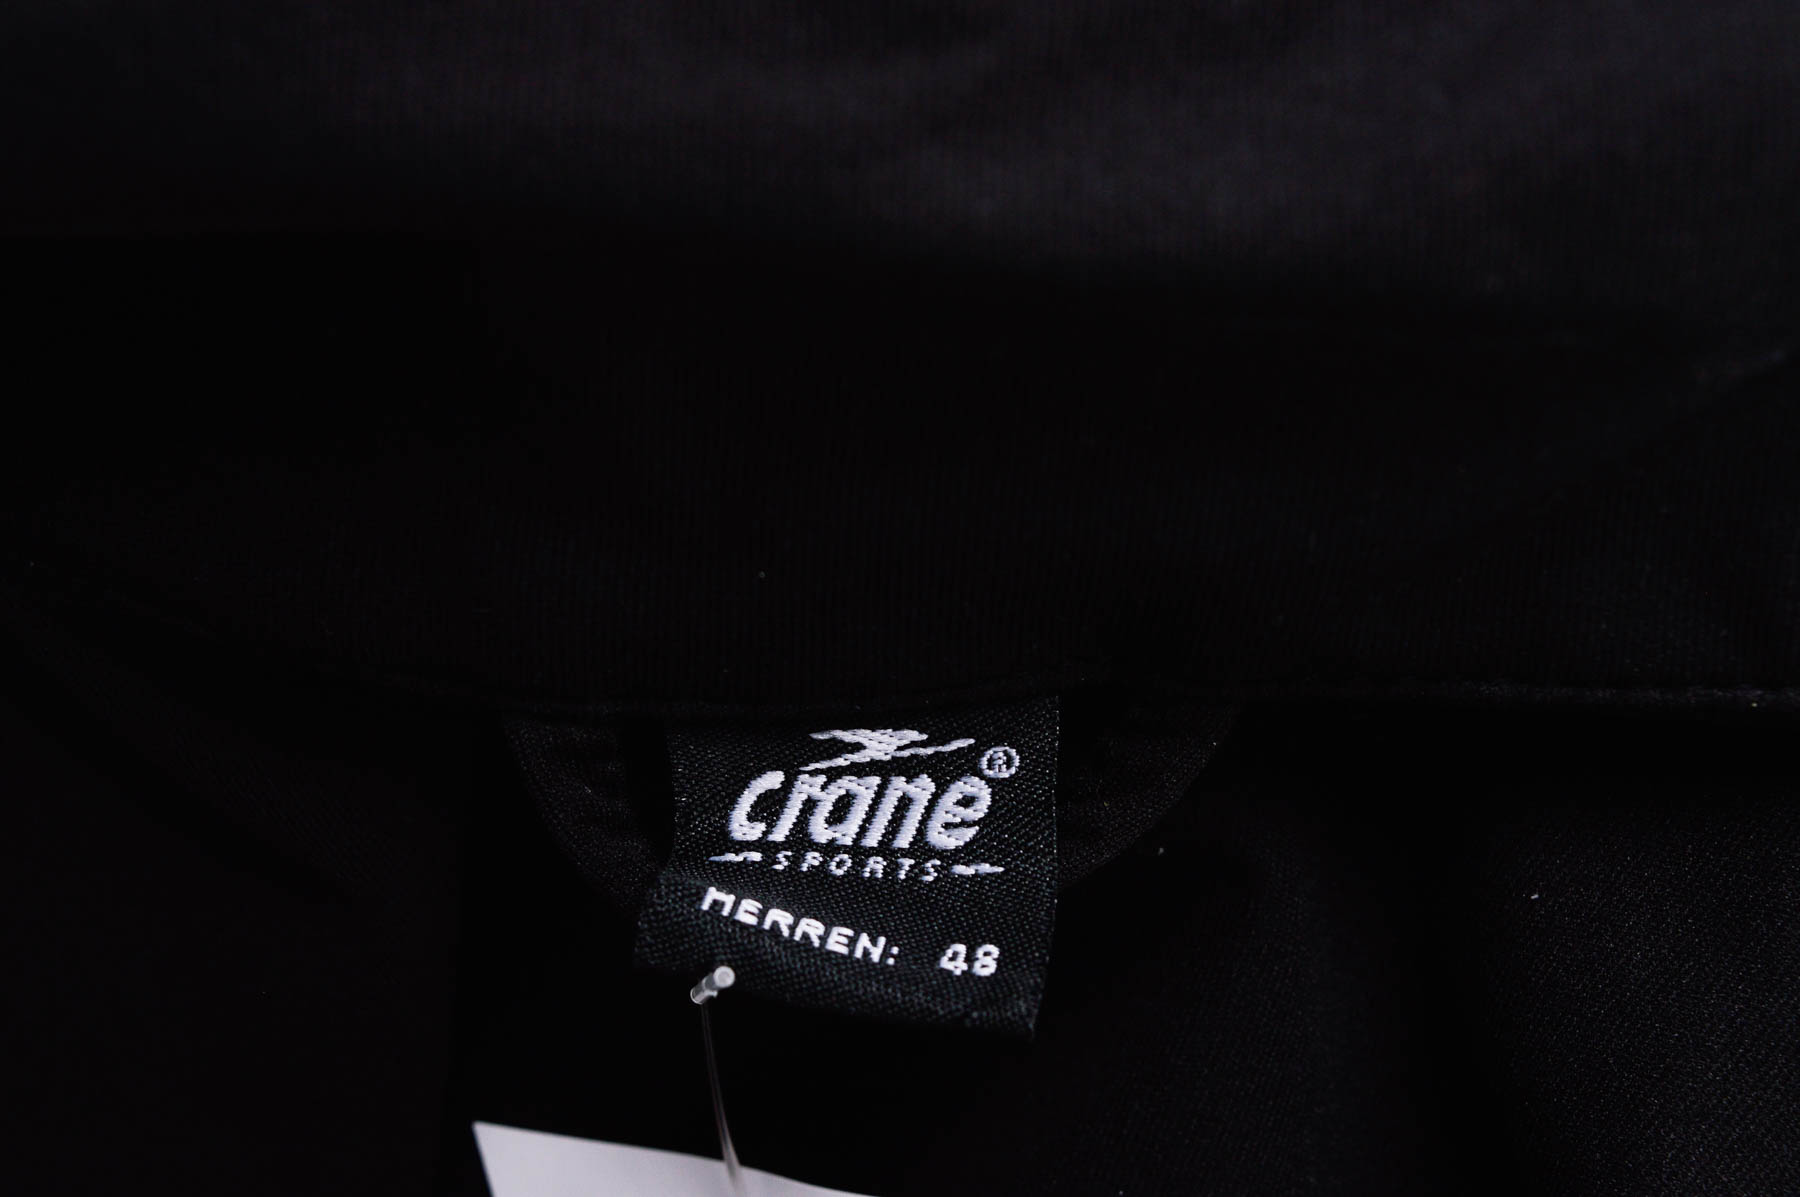 Men's vest - Crane SPORTS - 2